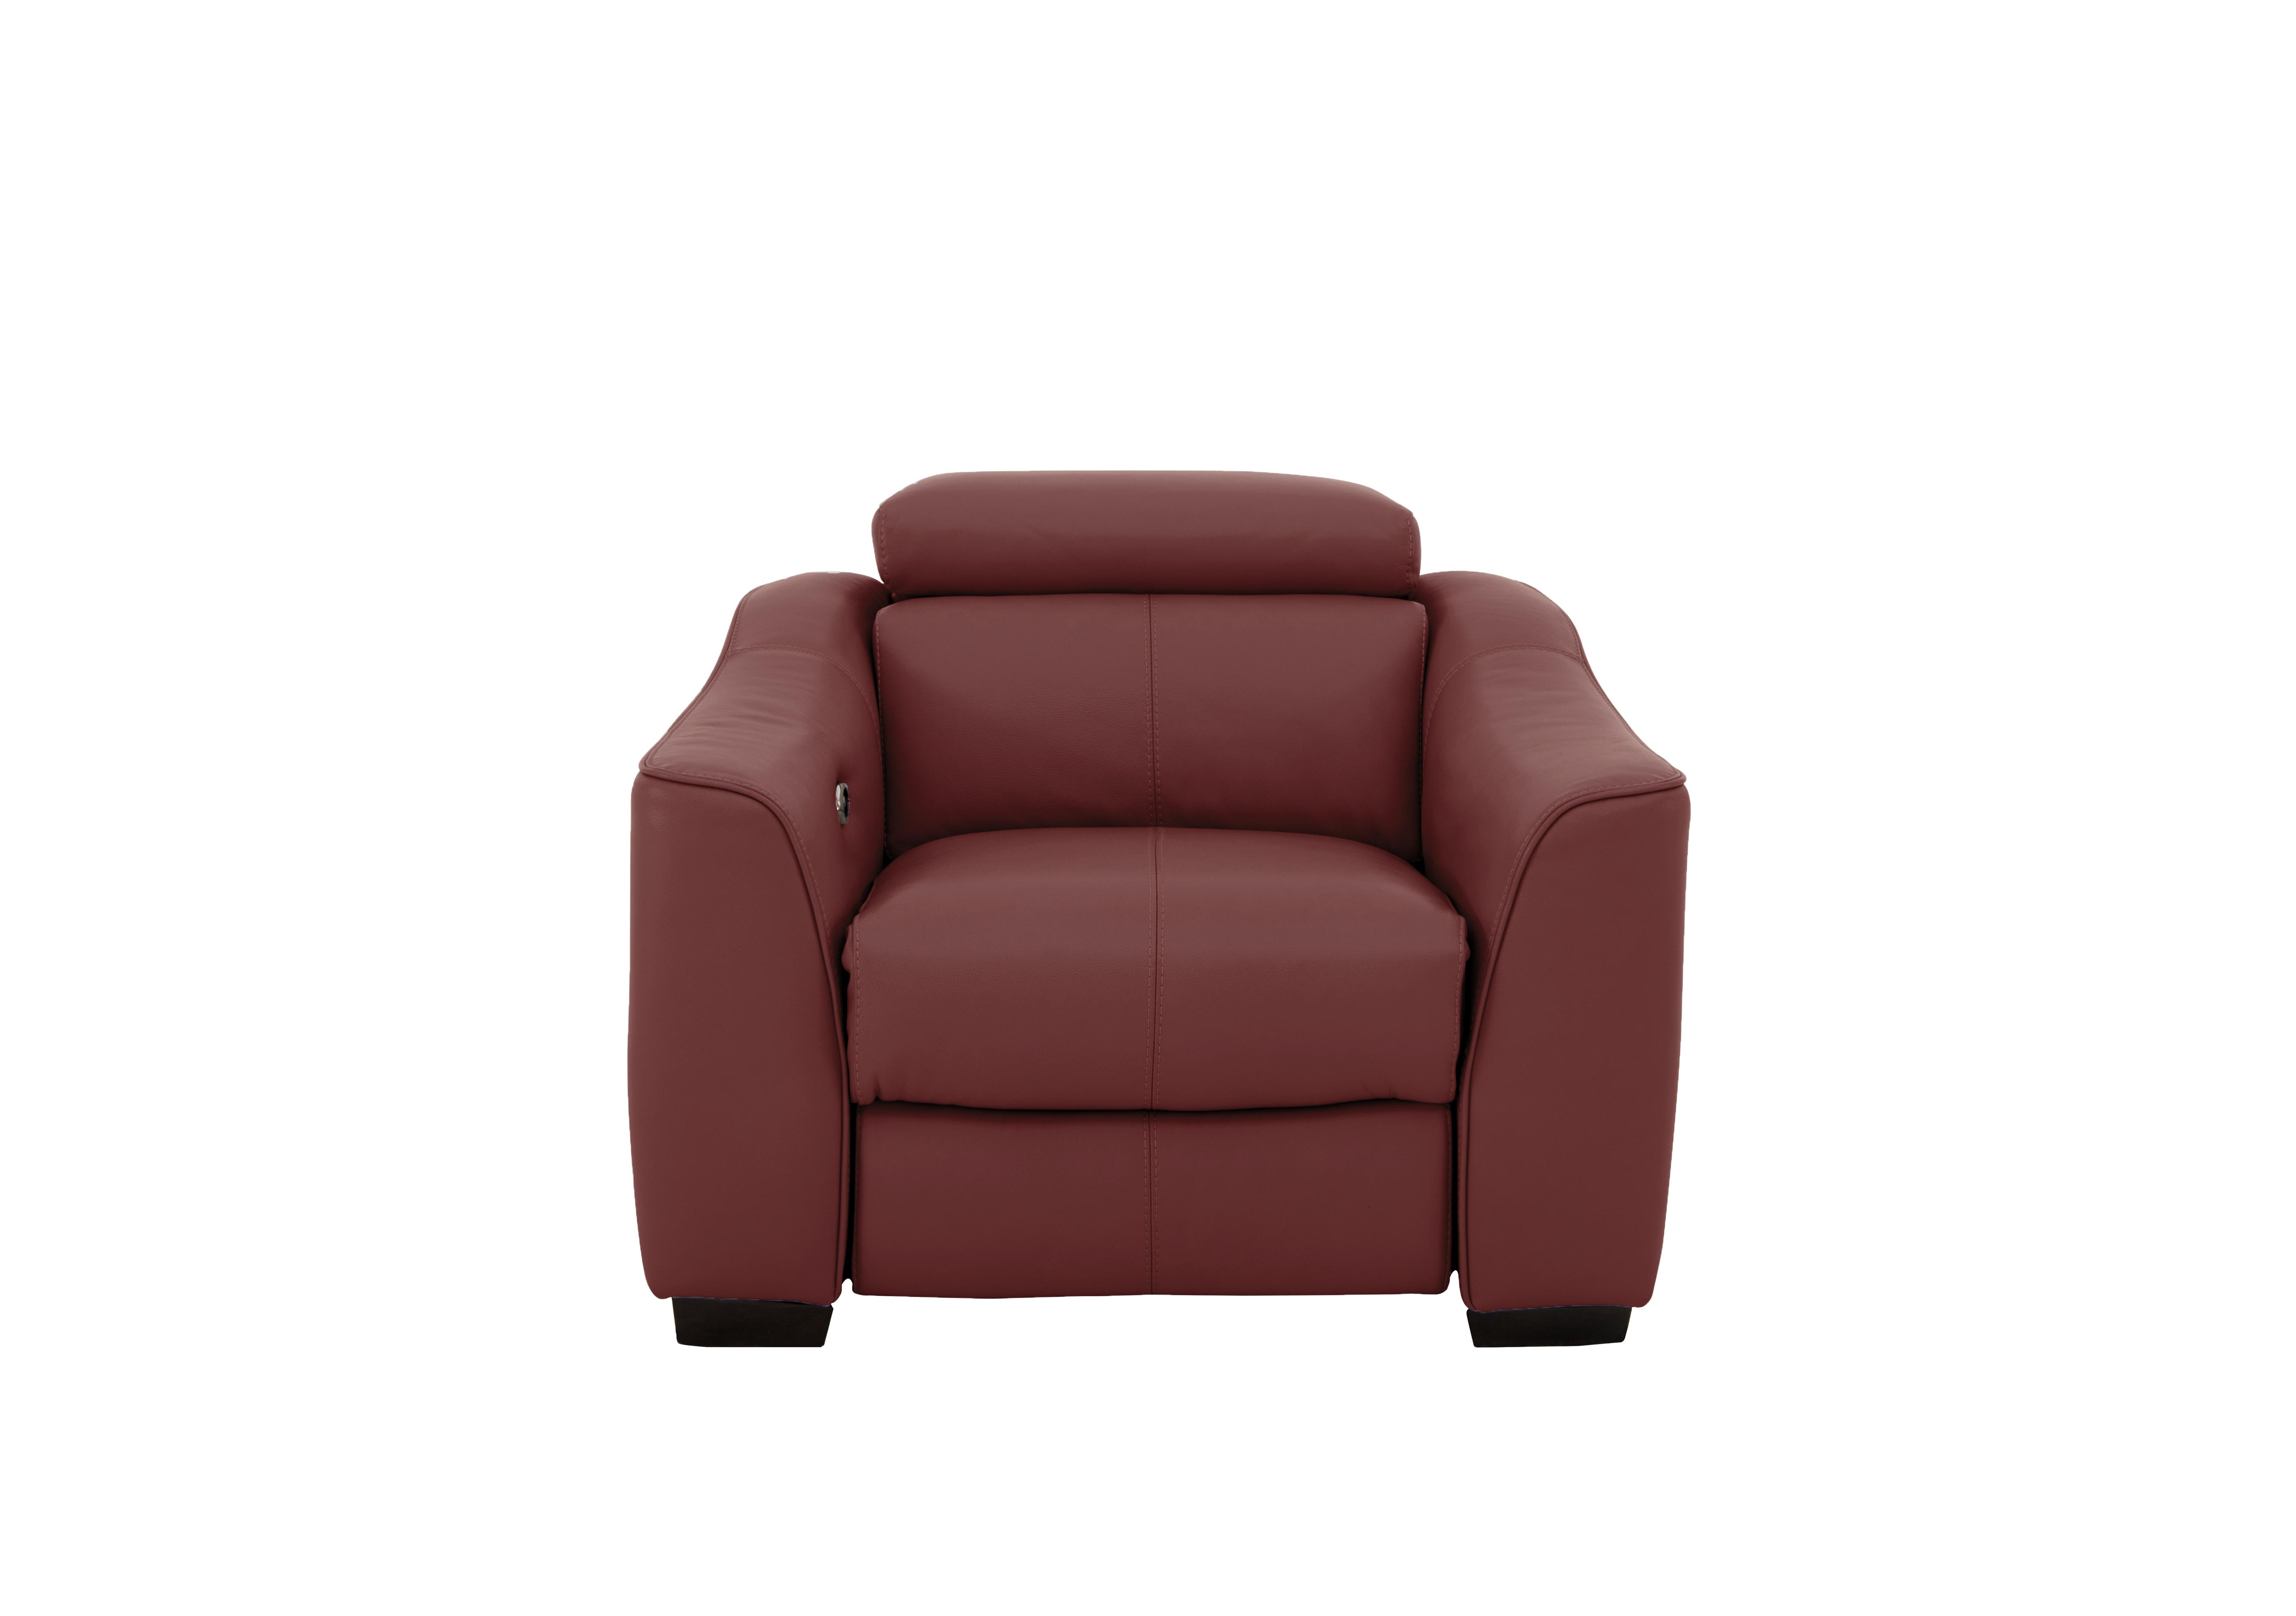 Elixir Leather Armchair in Bv-035c Deep Red on Furniture Village